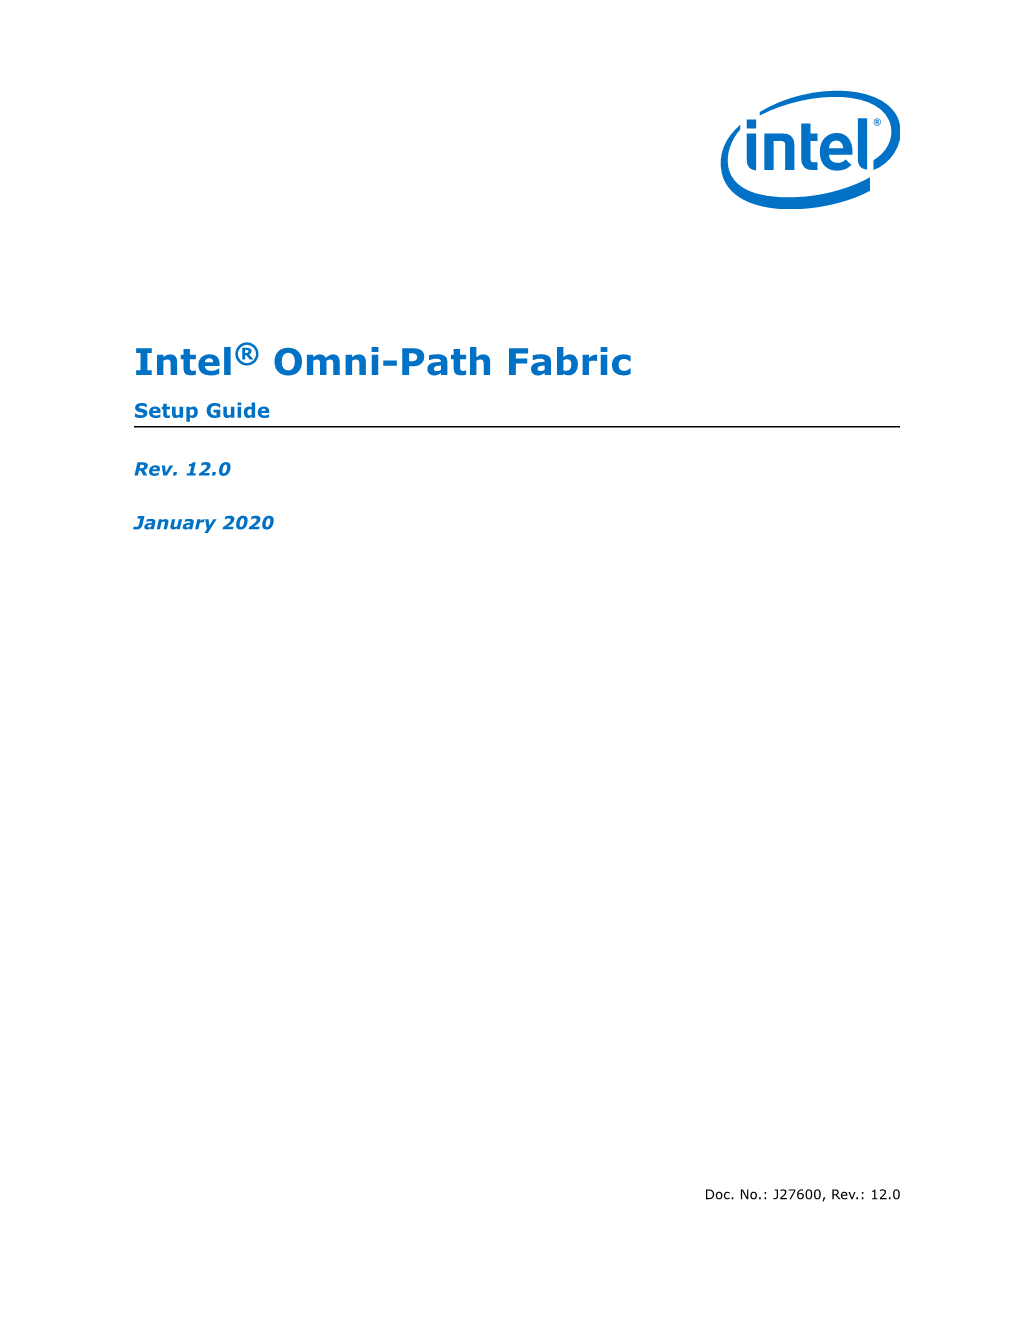 Intel® Omni-Path Fabric — Setup Guide